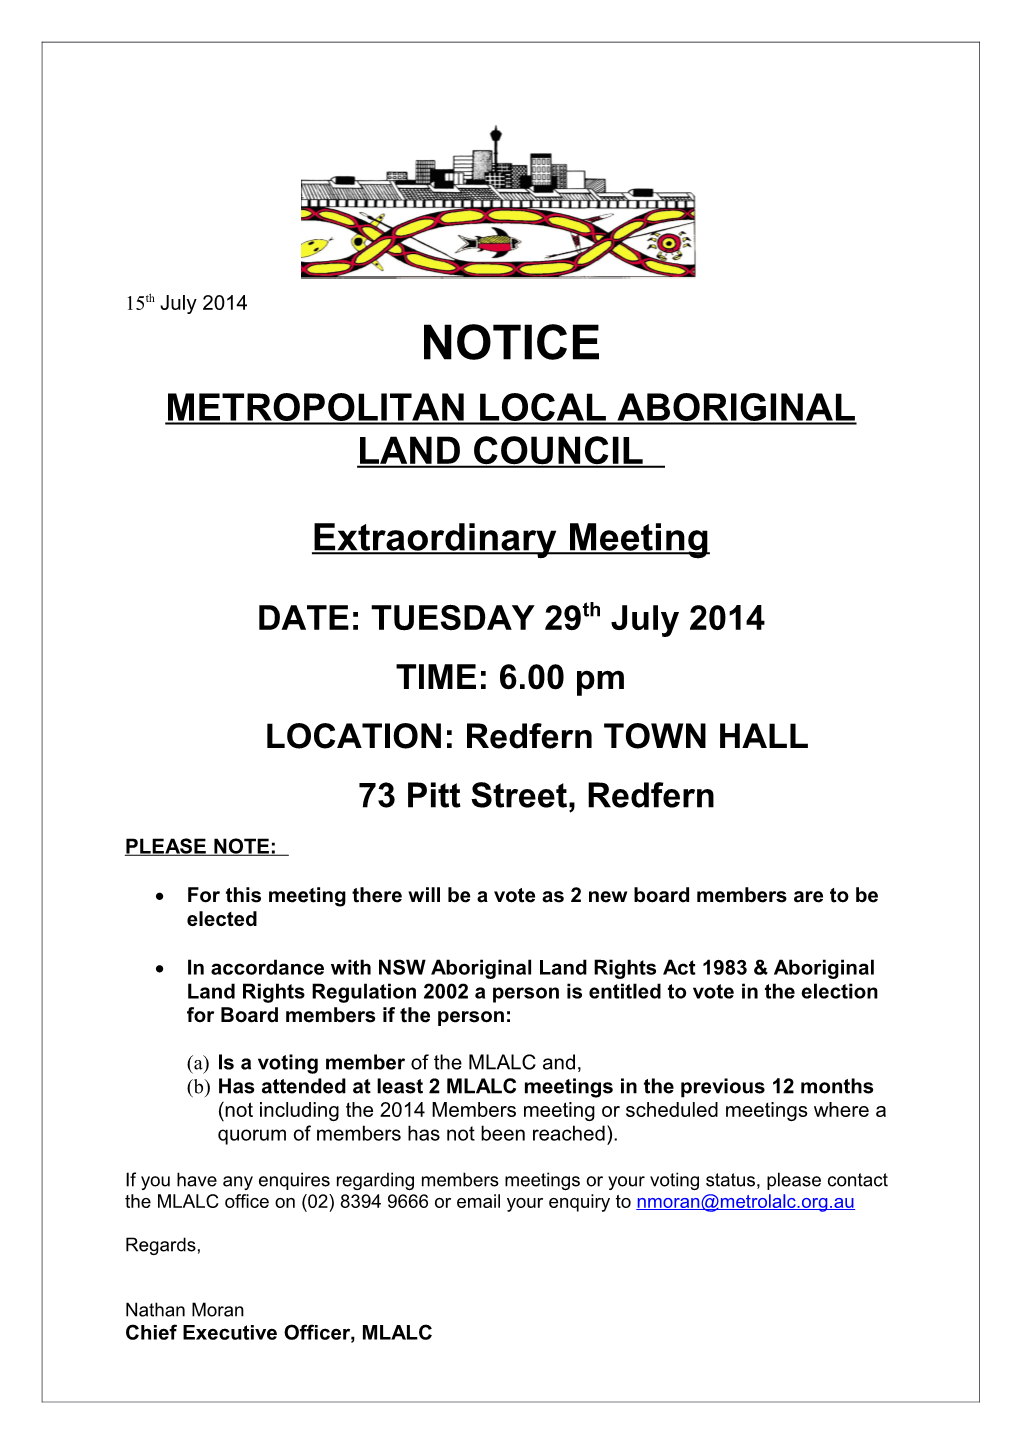 Metropolitan Local Aboriginal Land Council